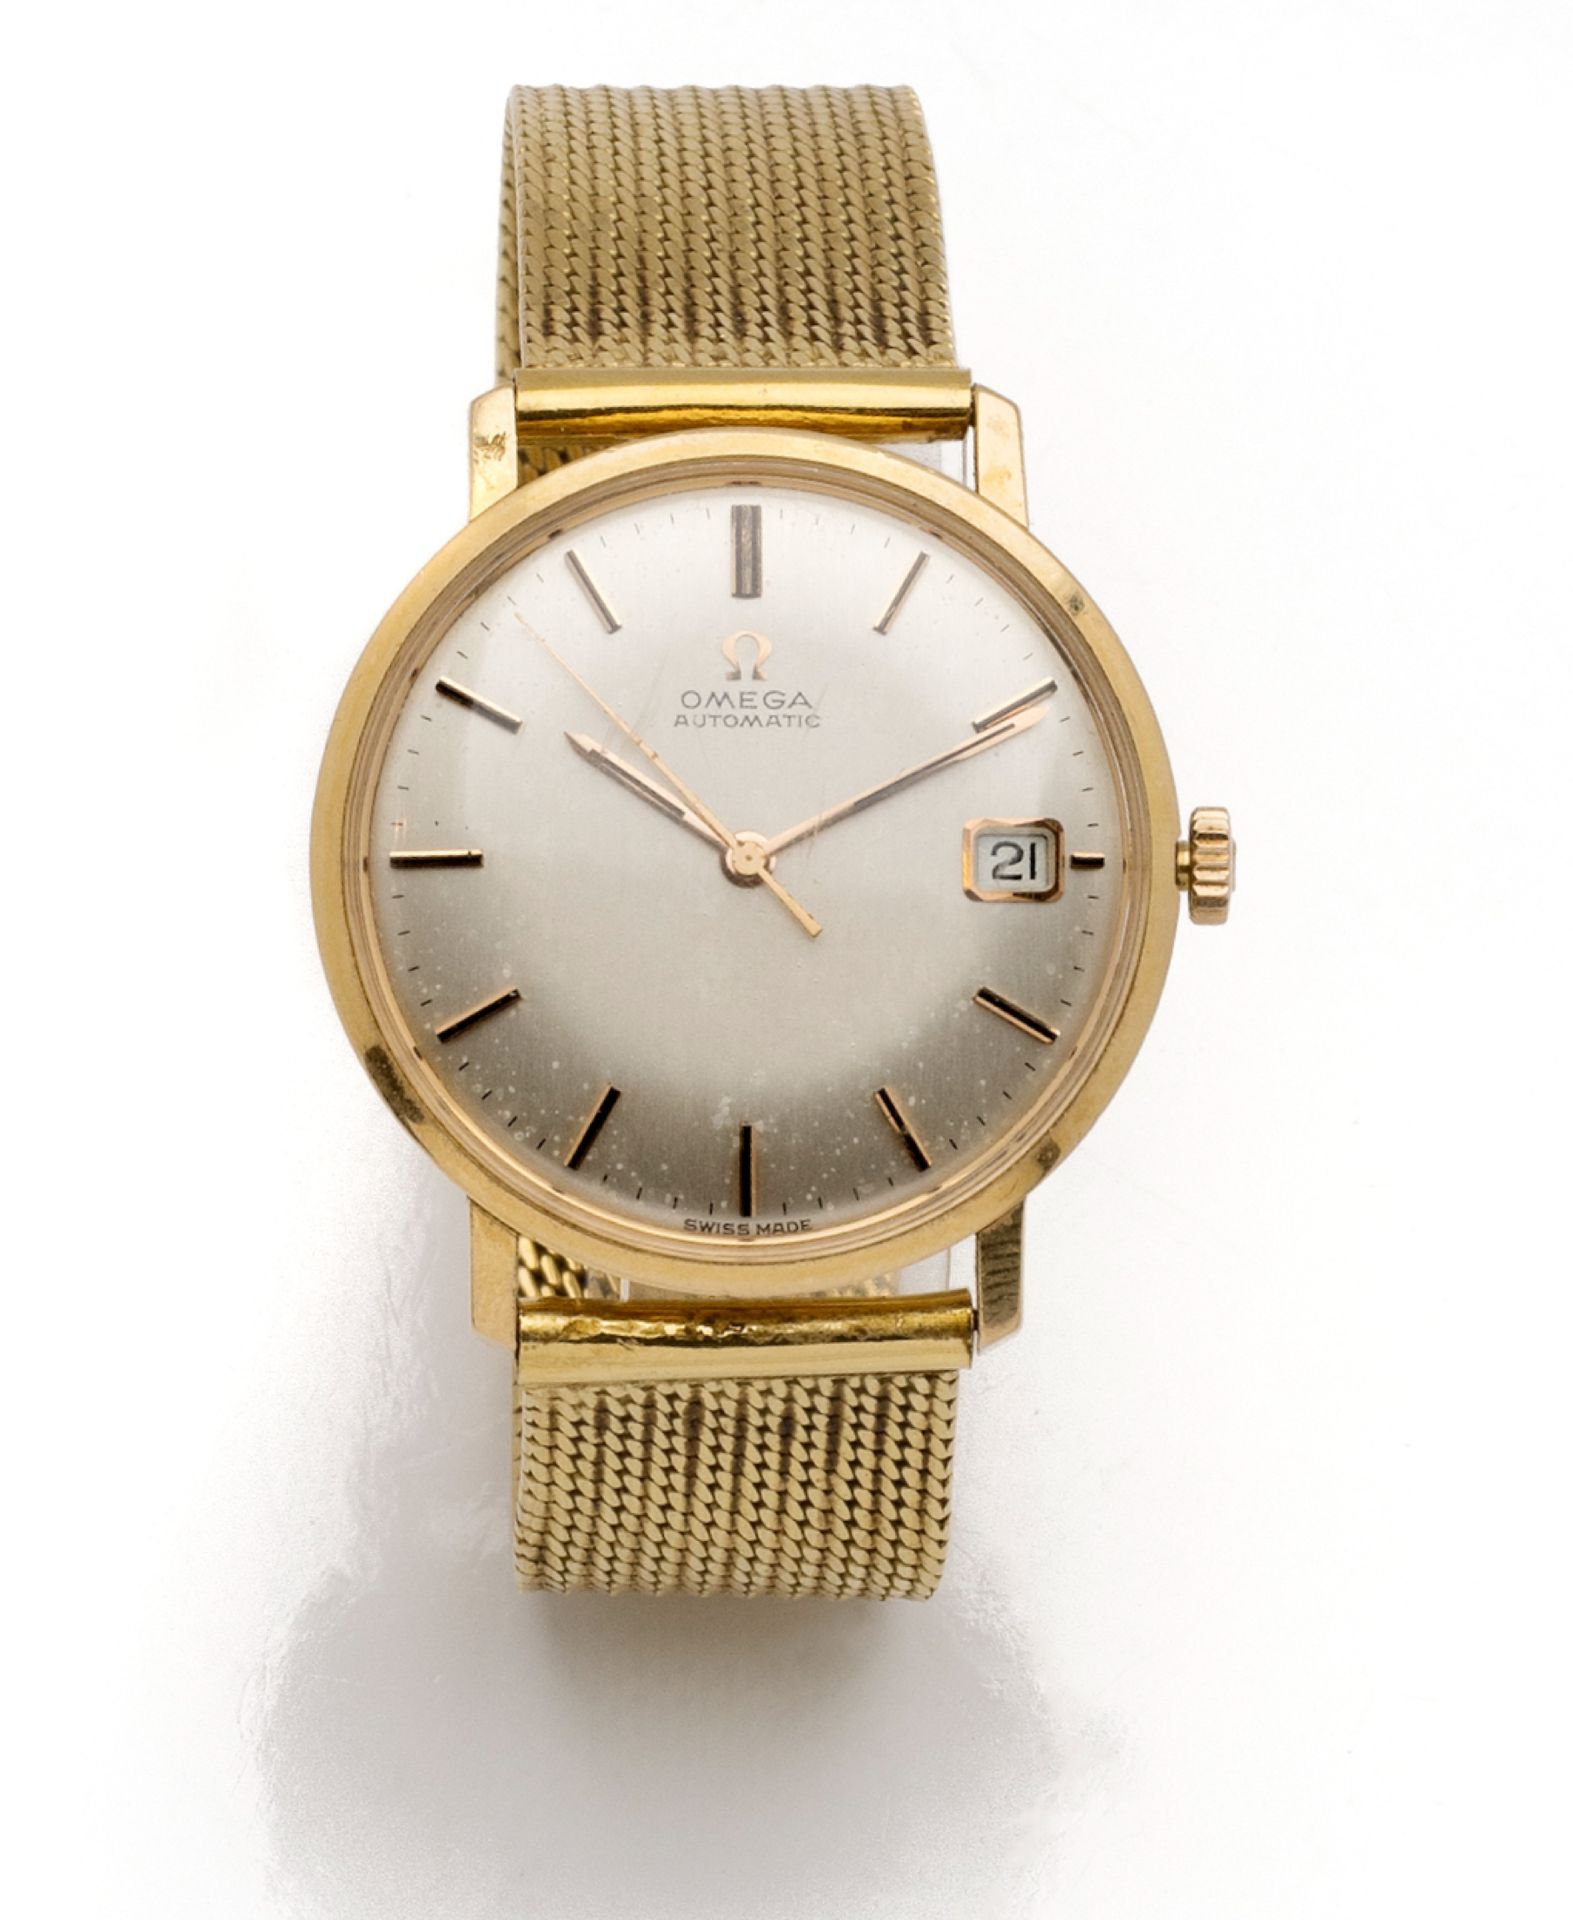 Null OMEGA AUTOMATIC
Armbanduhr aus 18 Karat Gold (750 Tausendstel), versilberte&hellip;